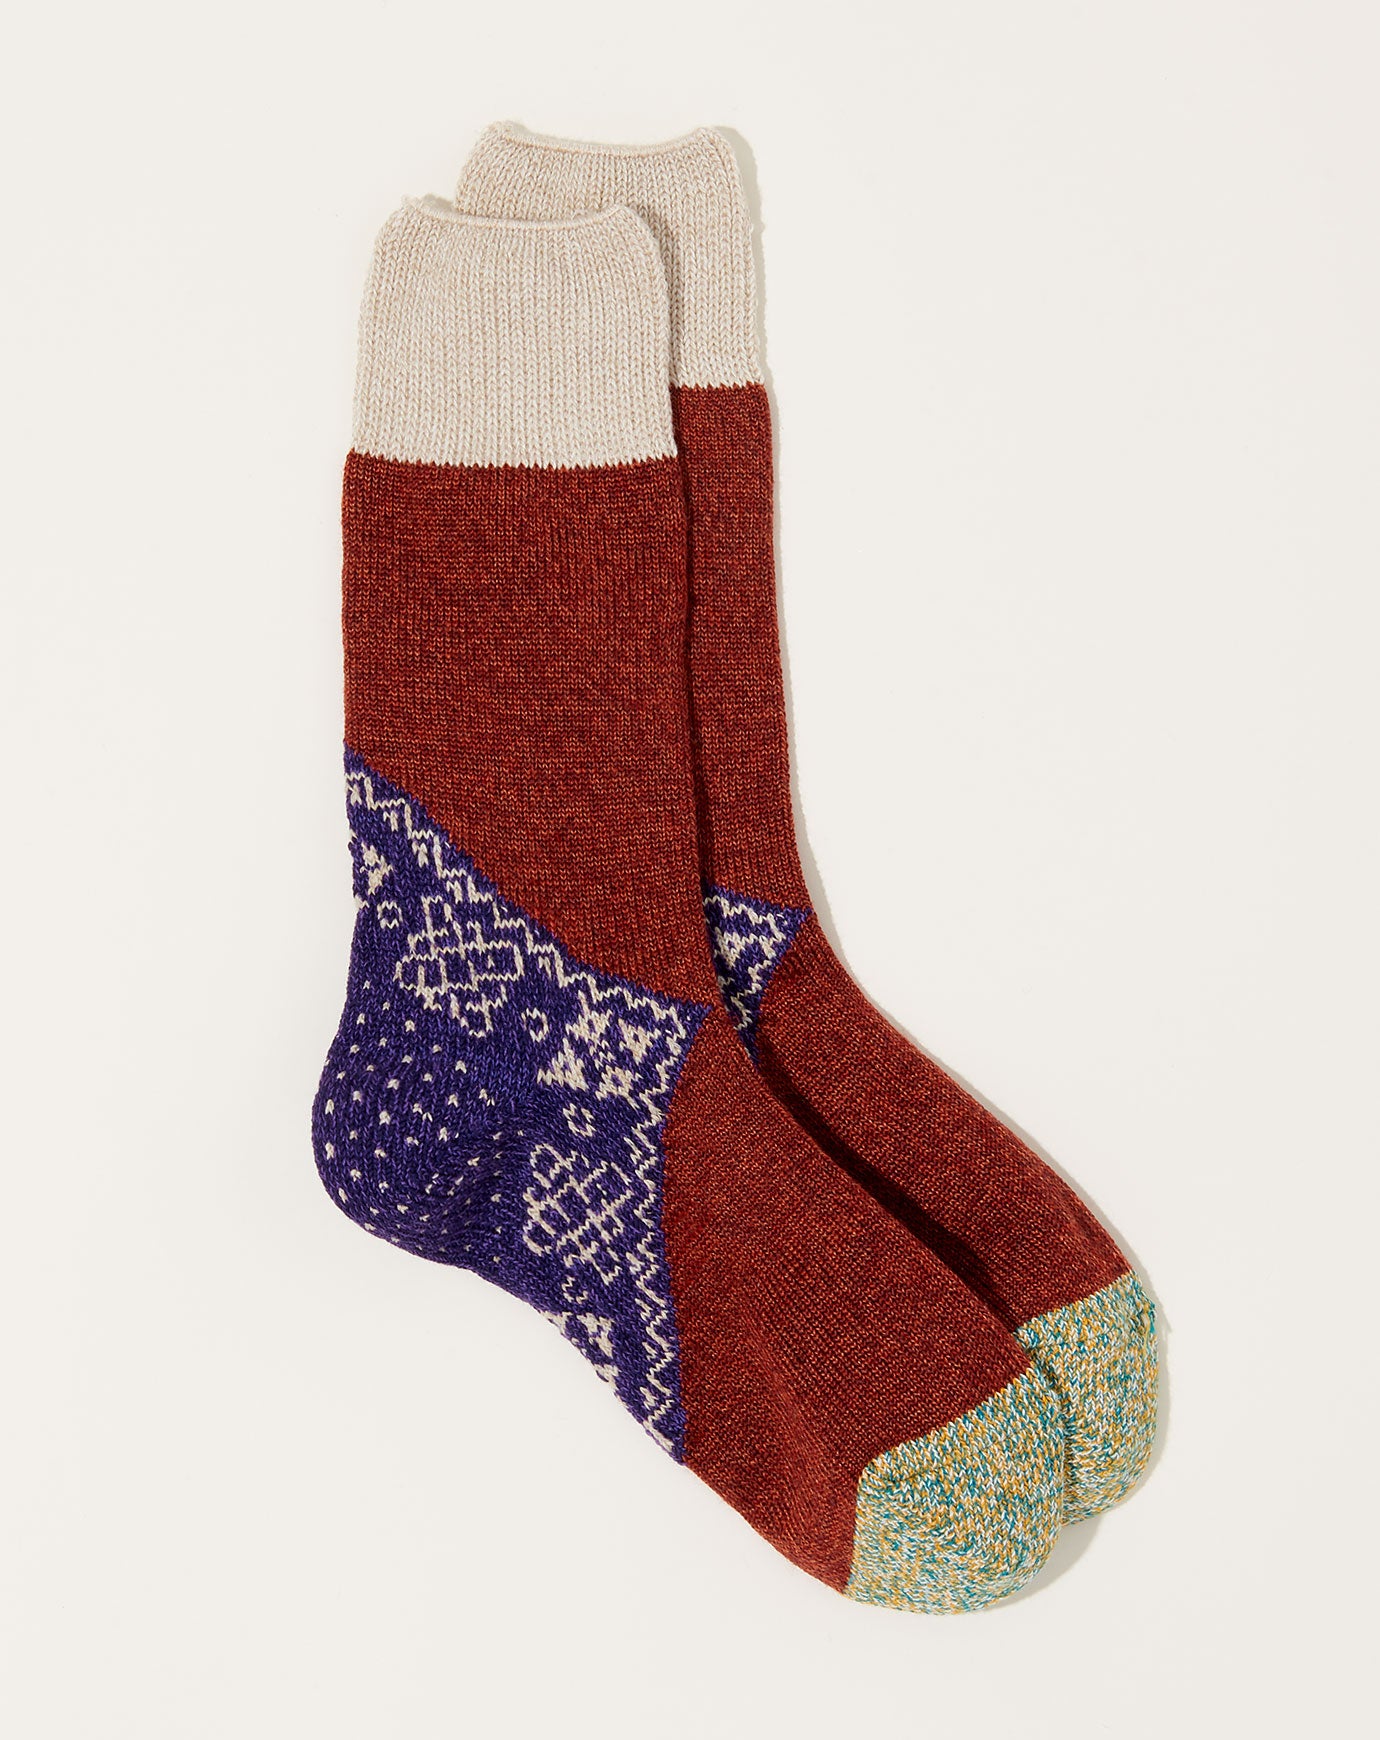 96 Yarns Wool Heel Bandana Socks in Purple | Kapital | Covet + Lou